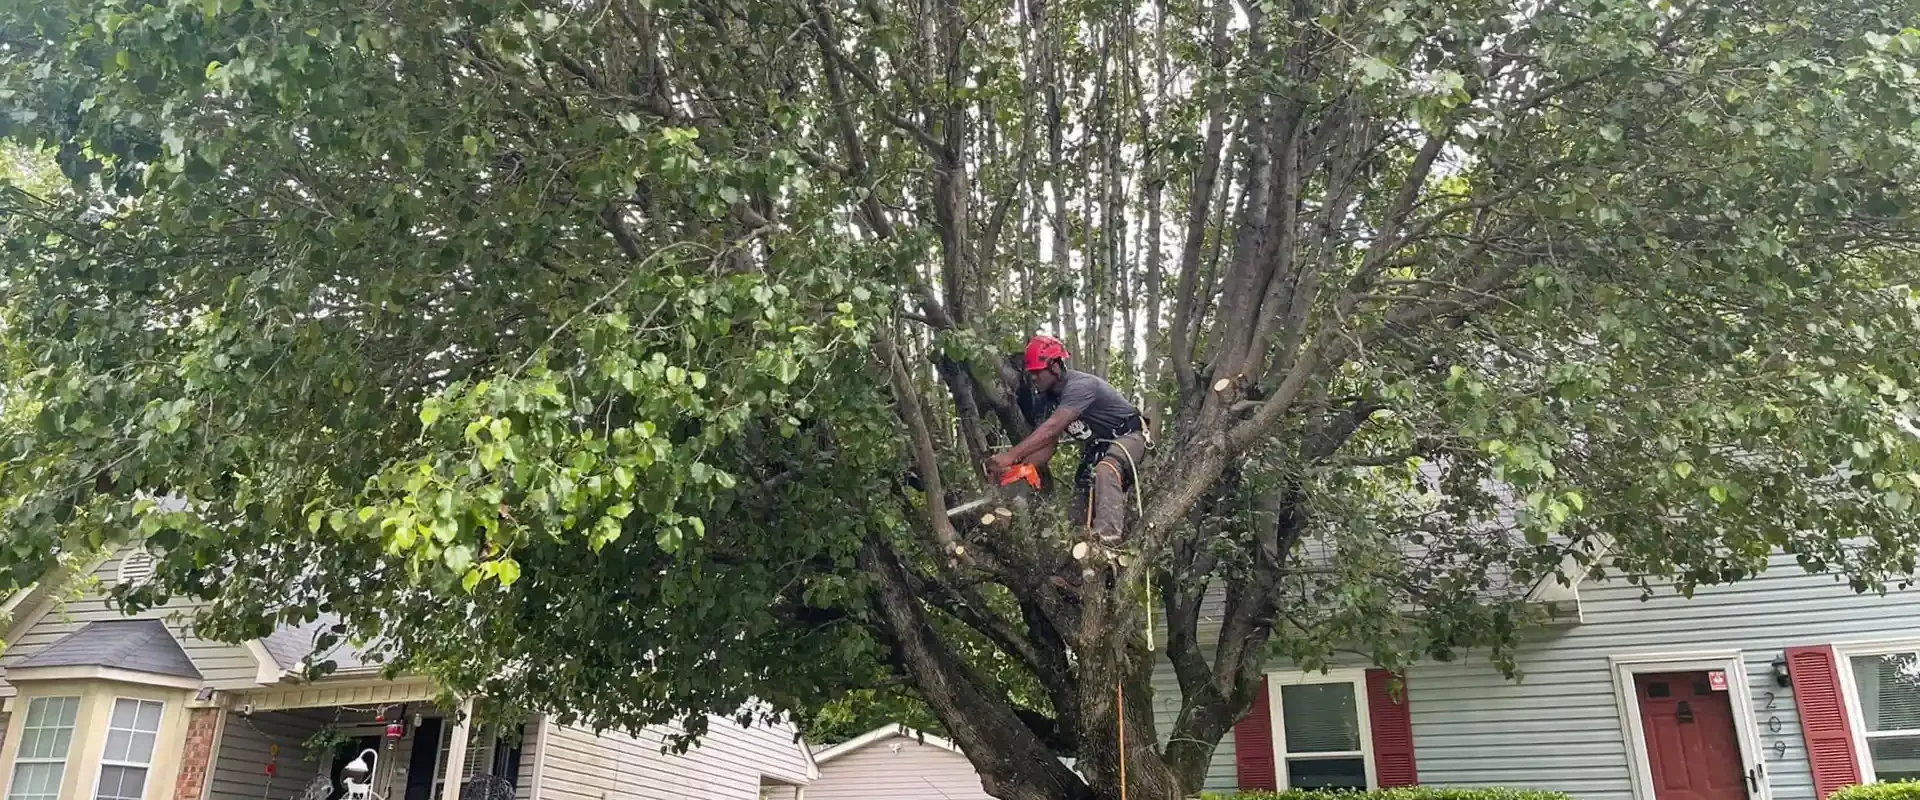 hero tree removal image